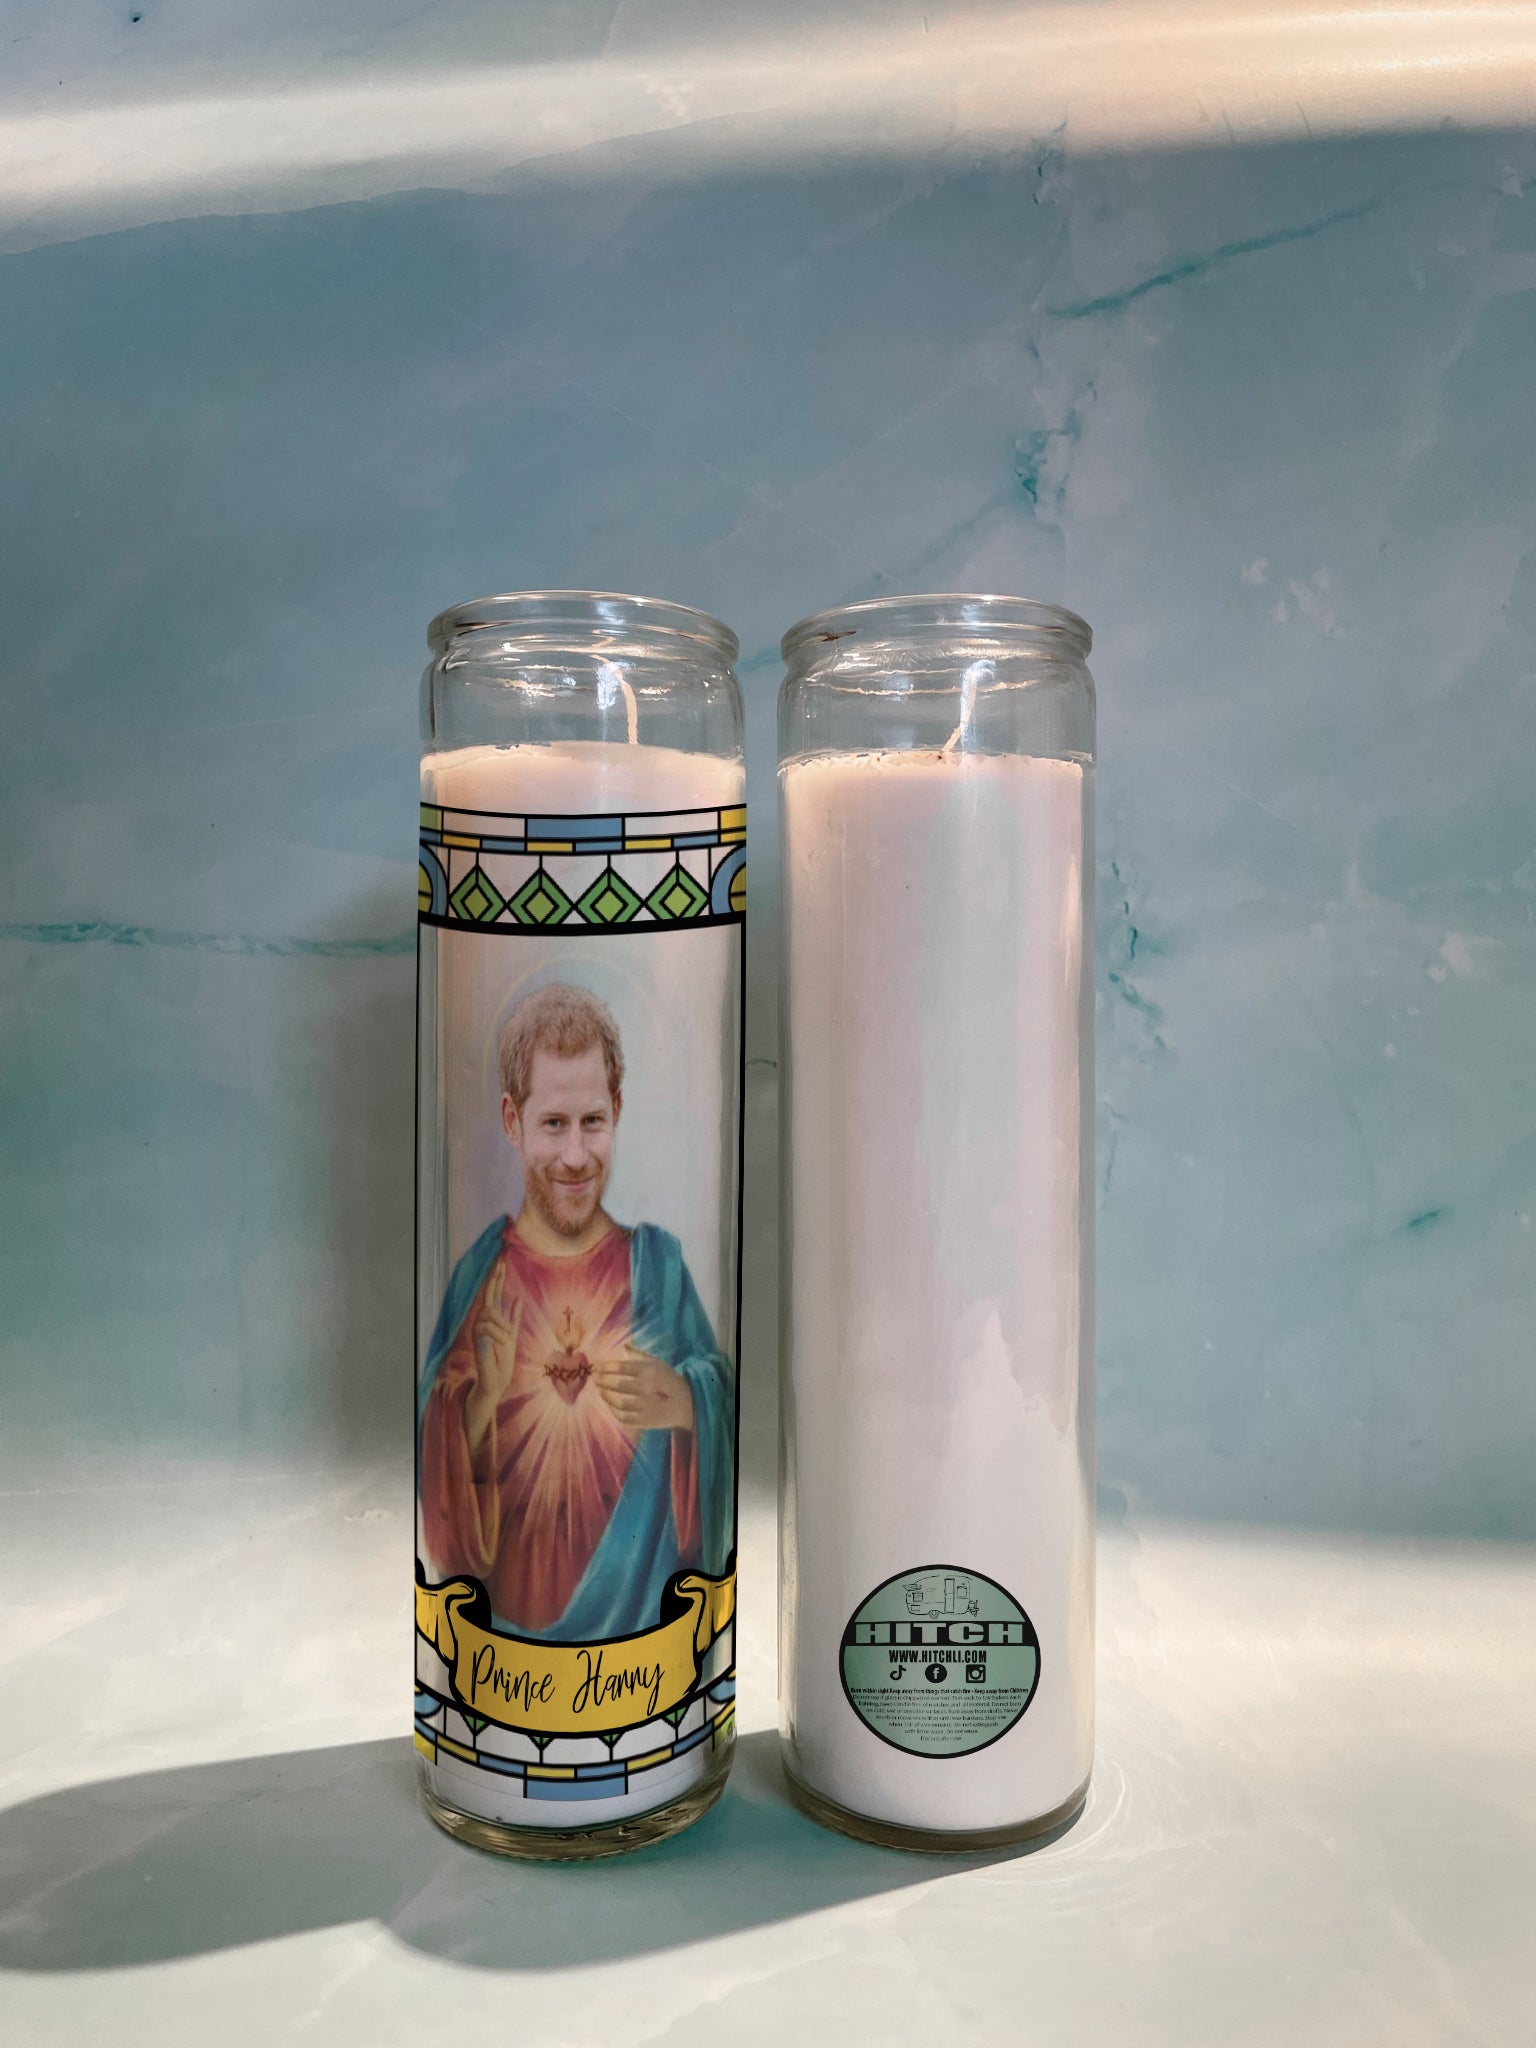 Prince Harry Original Prayer Candle